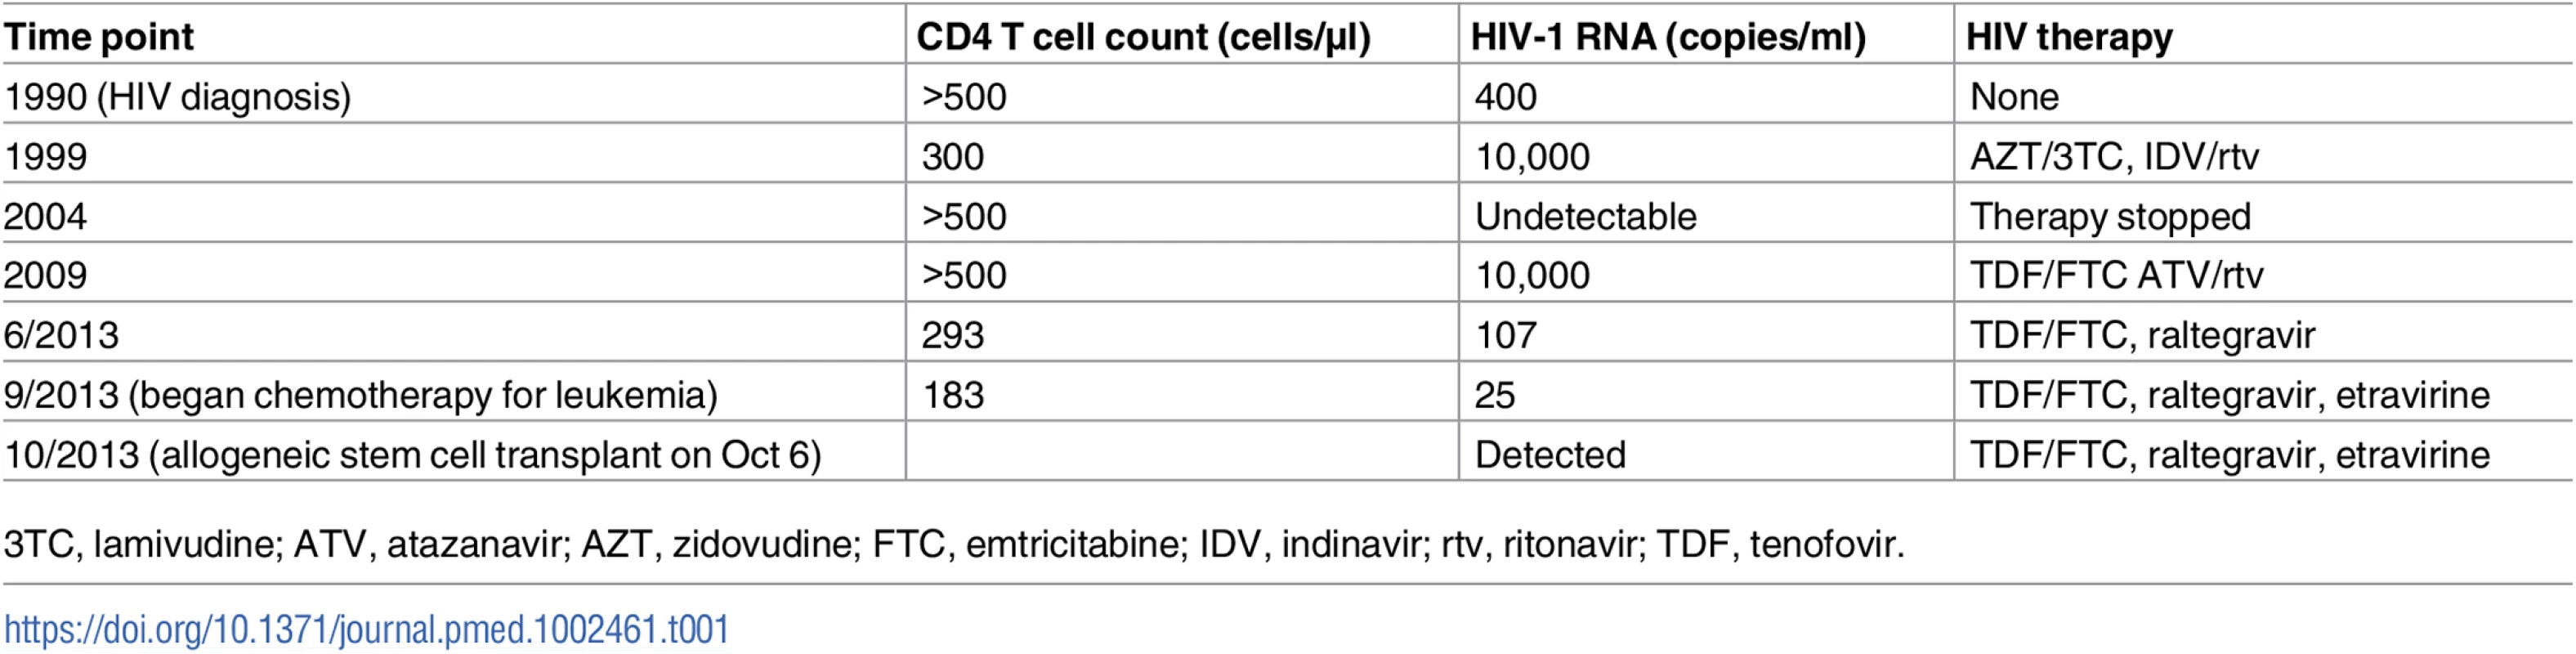 Pre-transplant HIV laboratory test results and antiretroviral treatment history.